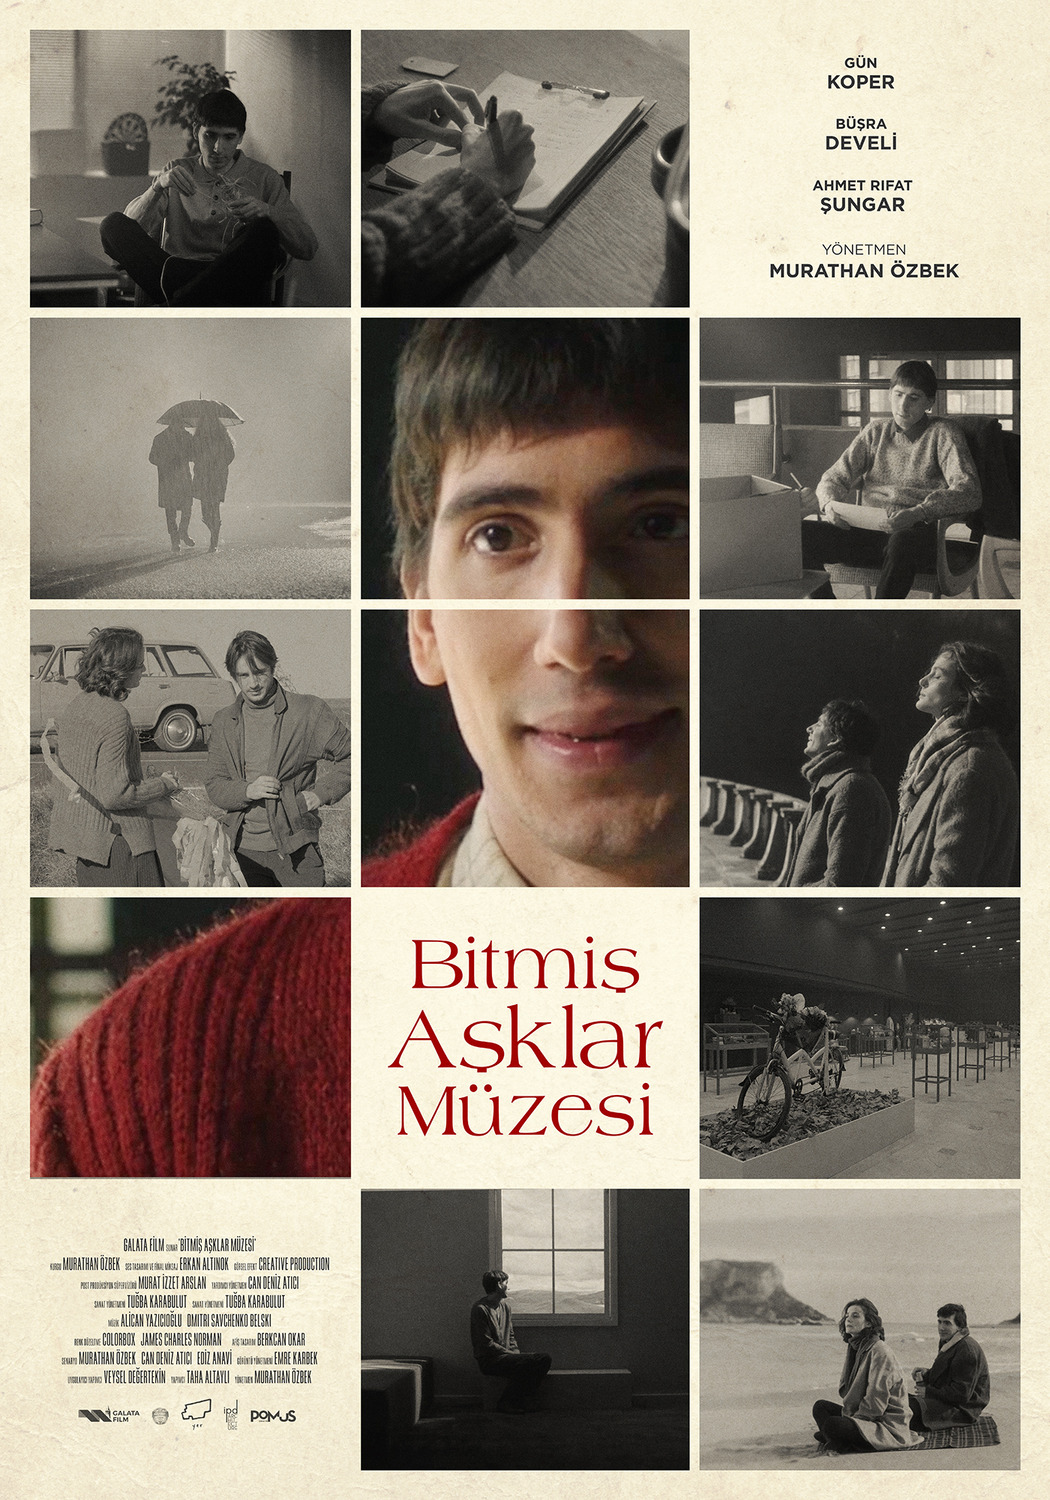 Extra Large Movie Poster Image for Bitmiş Aşklar Müzesi (#4 of 4)